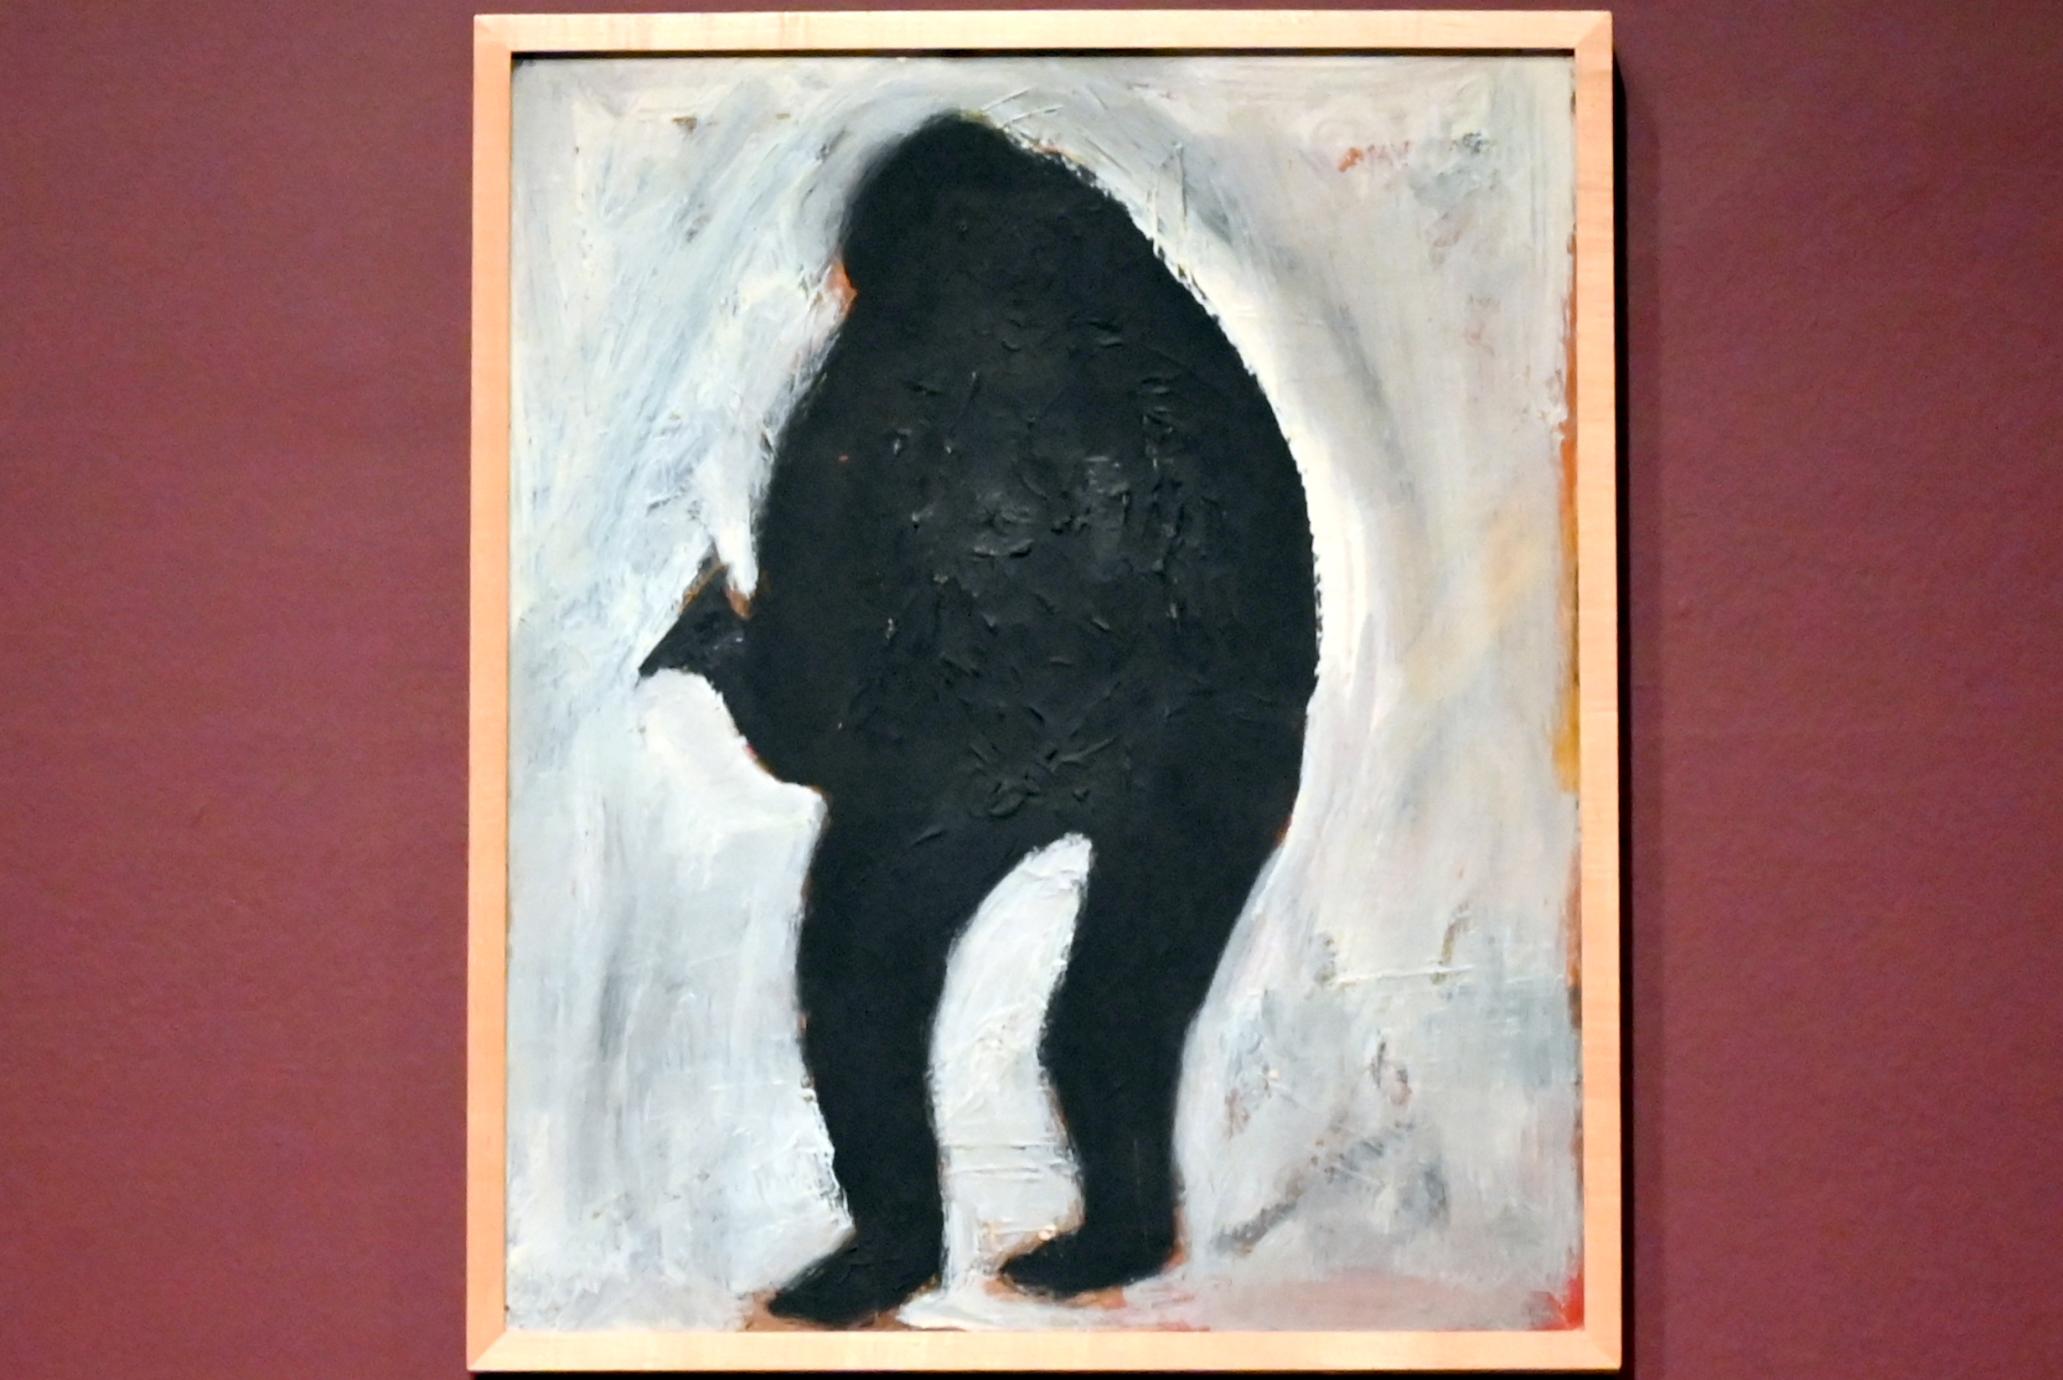 Ted Joans (1958–2003), Vogel lebt!, London, Tate Modern, Ausstellung "Surrealism Beyond Borders" vom 24.02.-29.08.2022, Saal 6, 1958